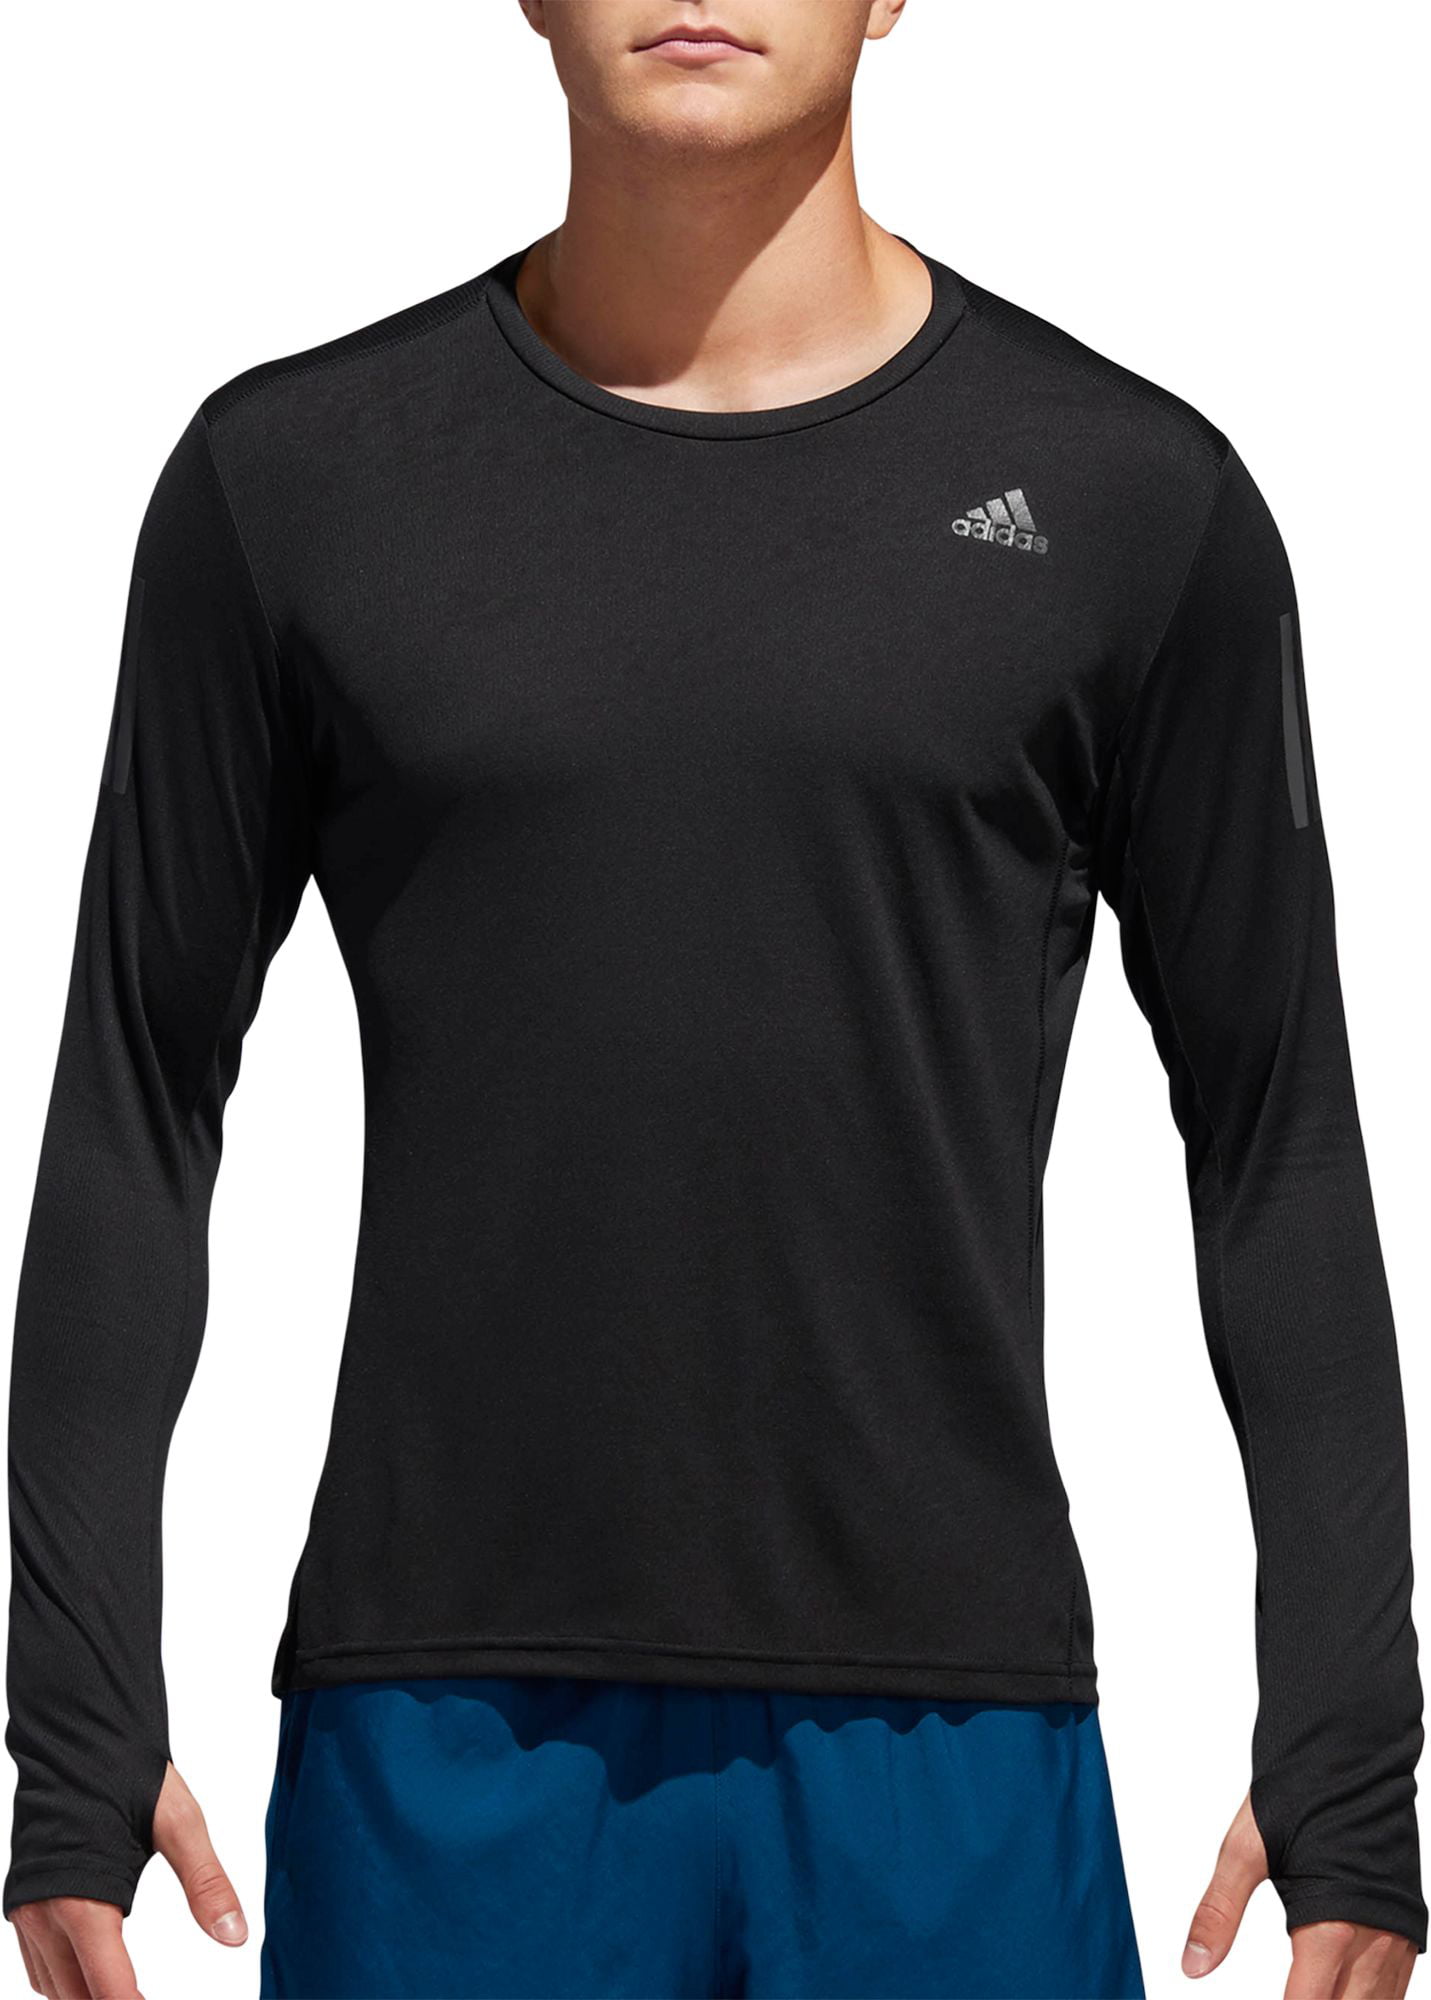 Adidas - adidas Men's Own the Run Long Sleeve shirt - Walmart.com ...